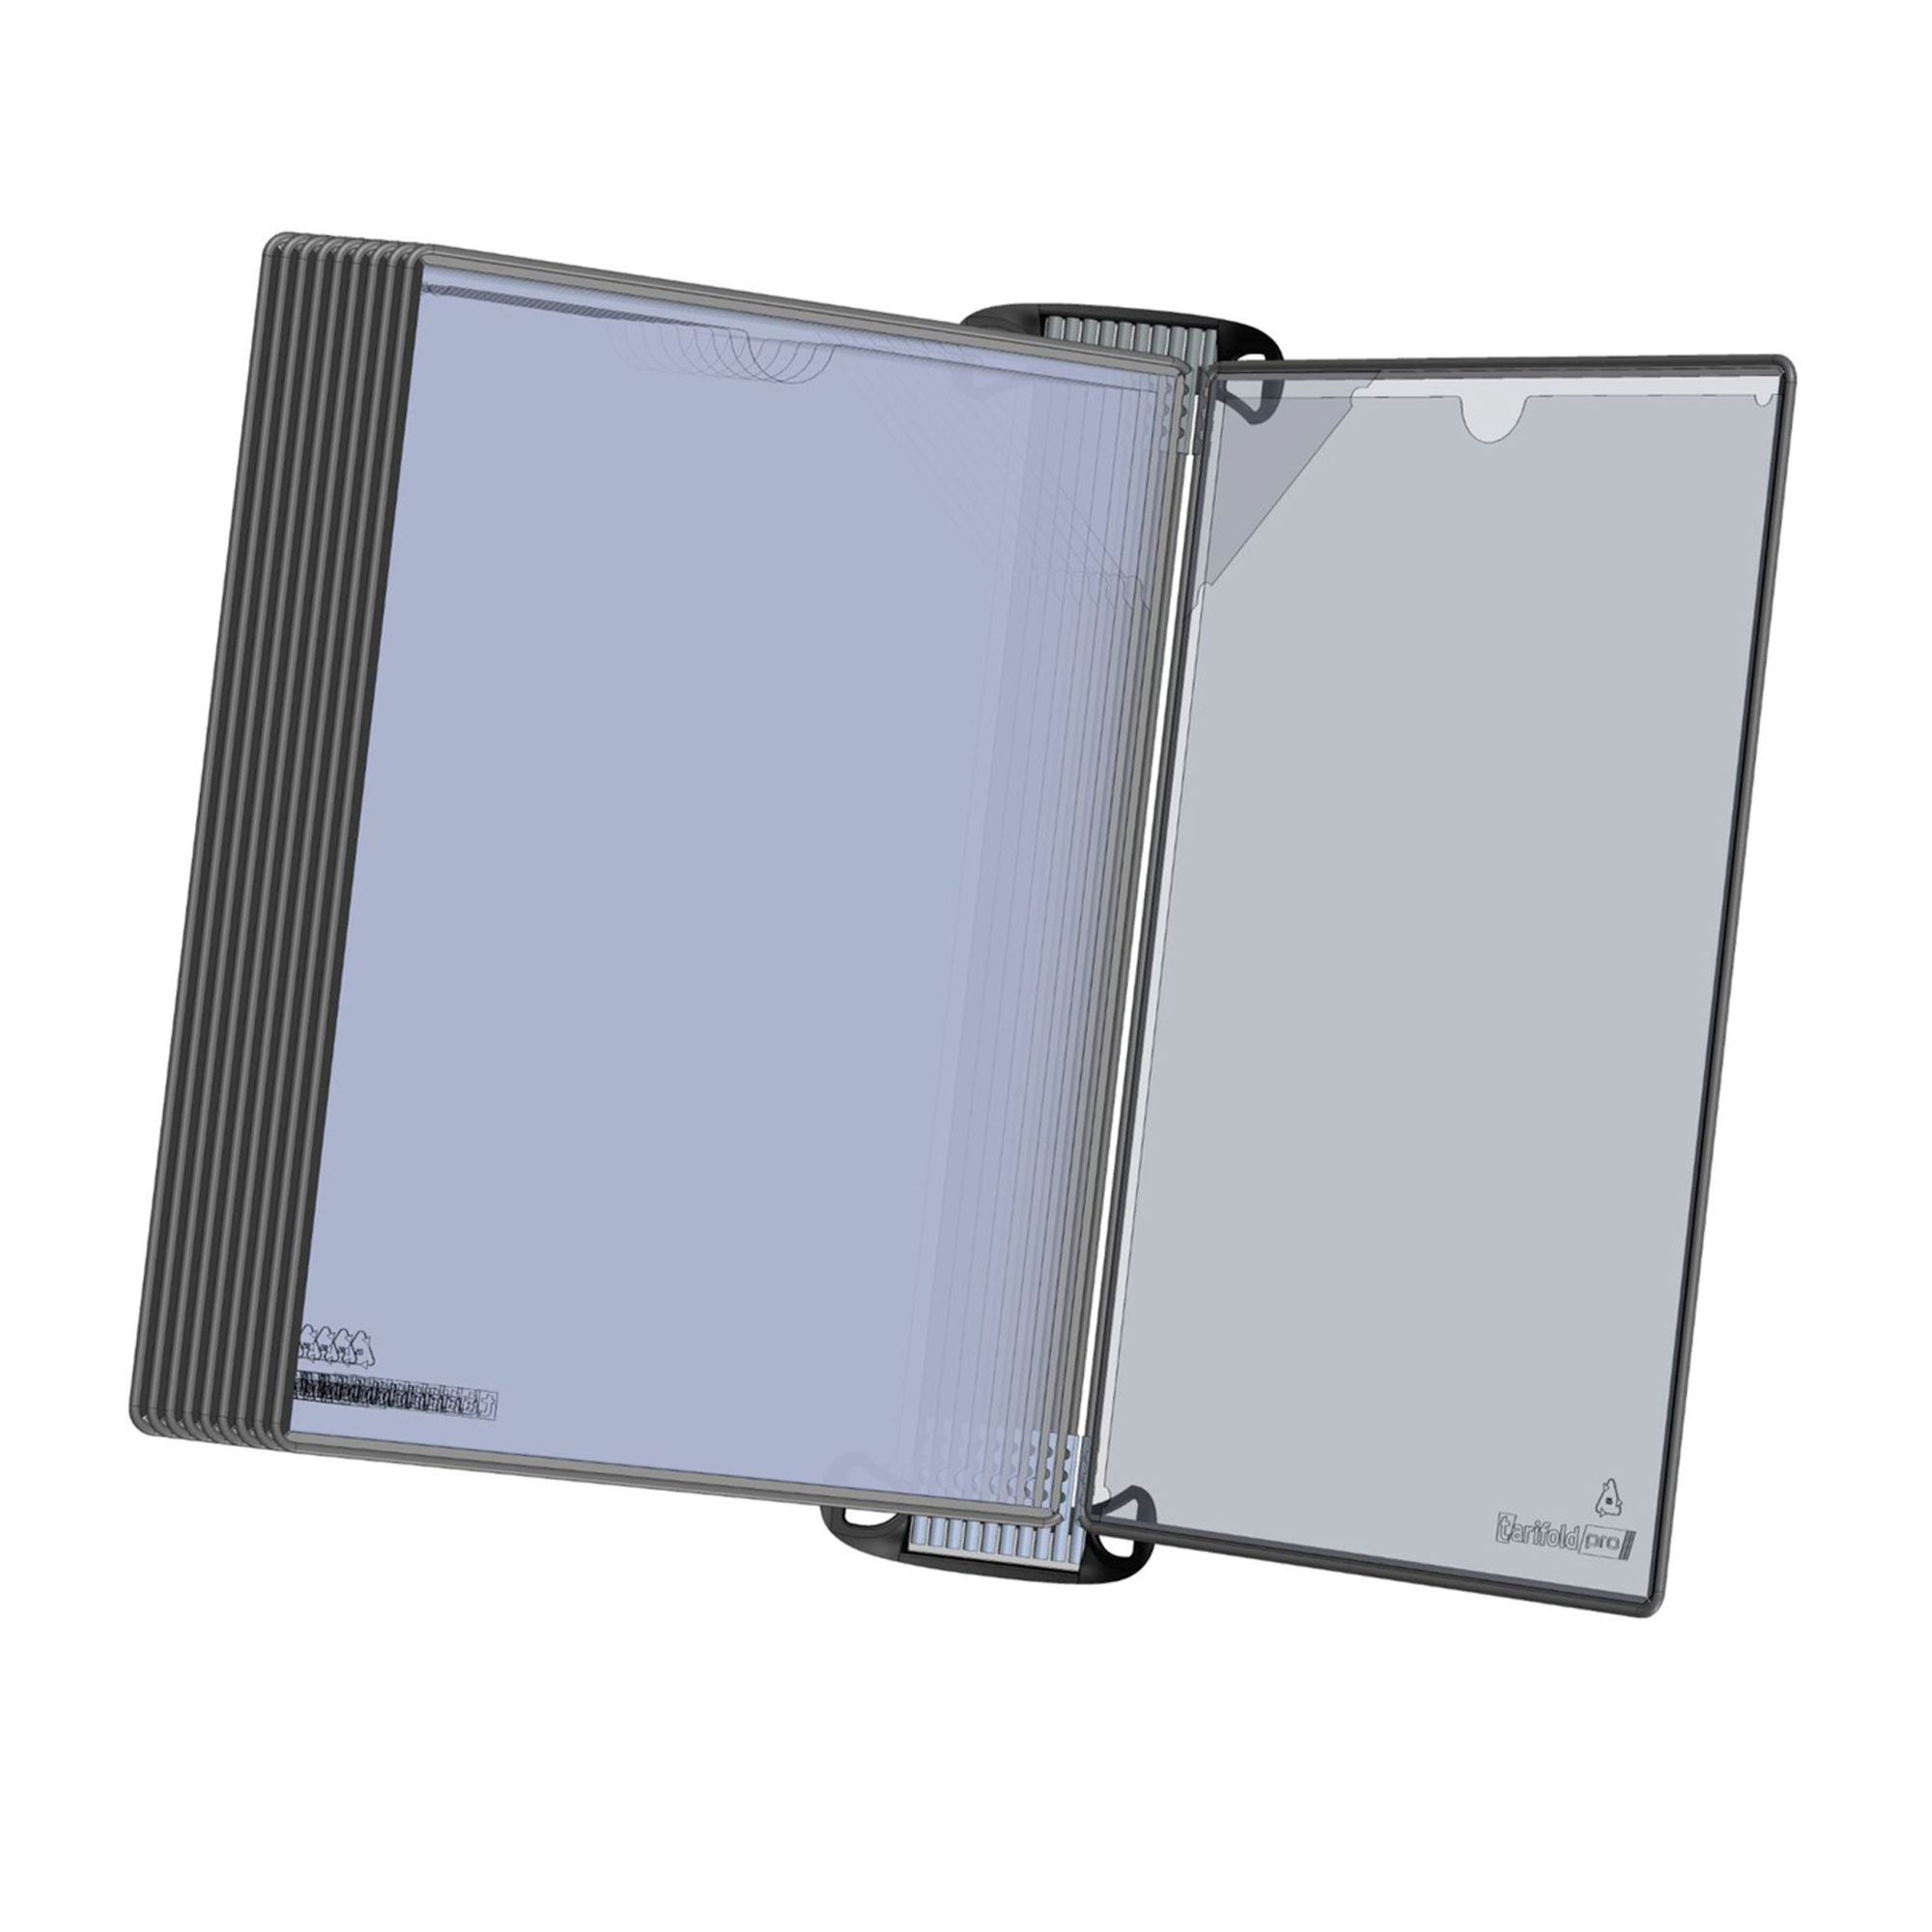 Tp920307 Pro Wall Display Unit With 10 Display Pockets, Black - 20 Sheet